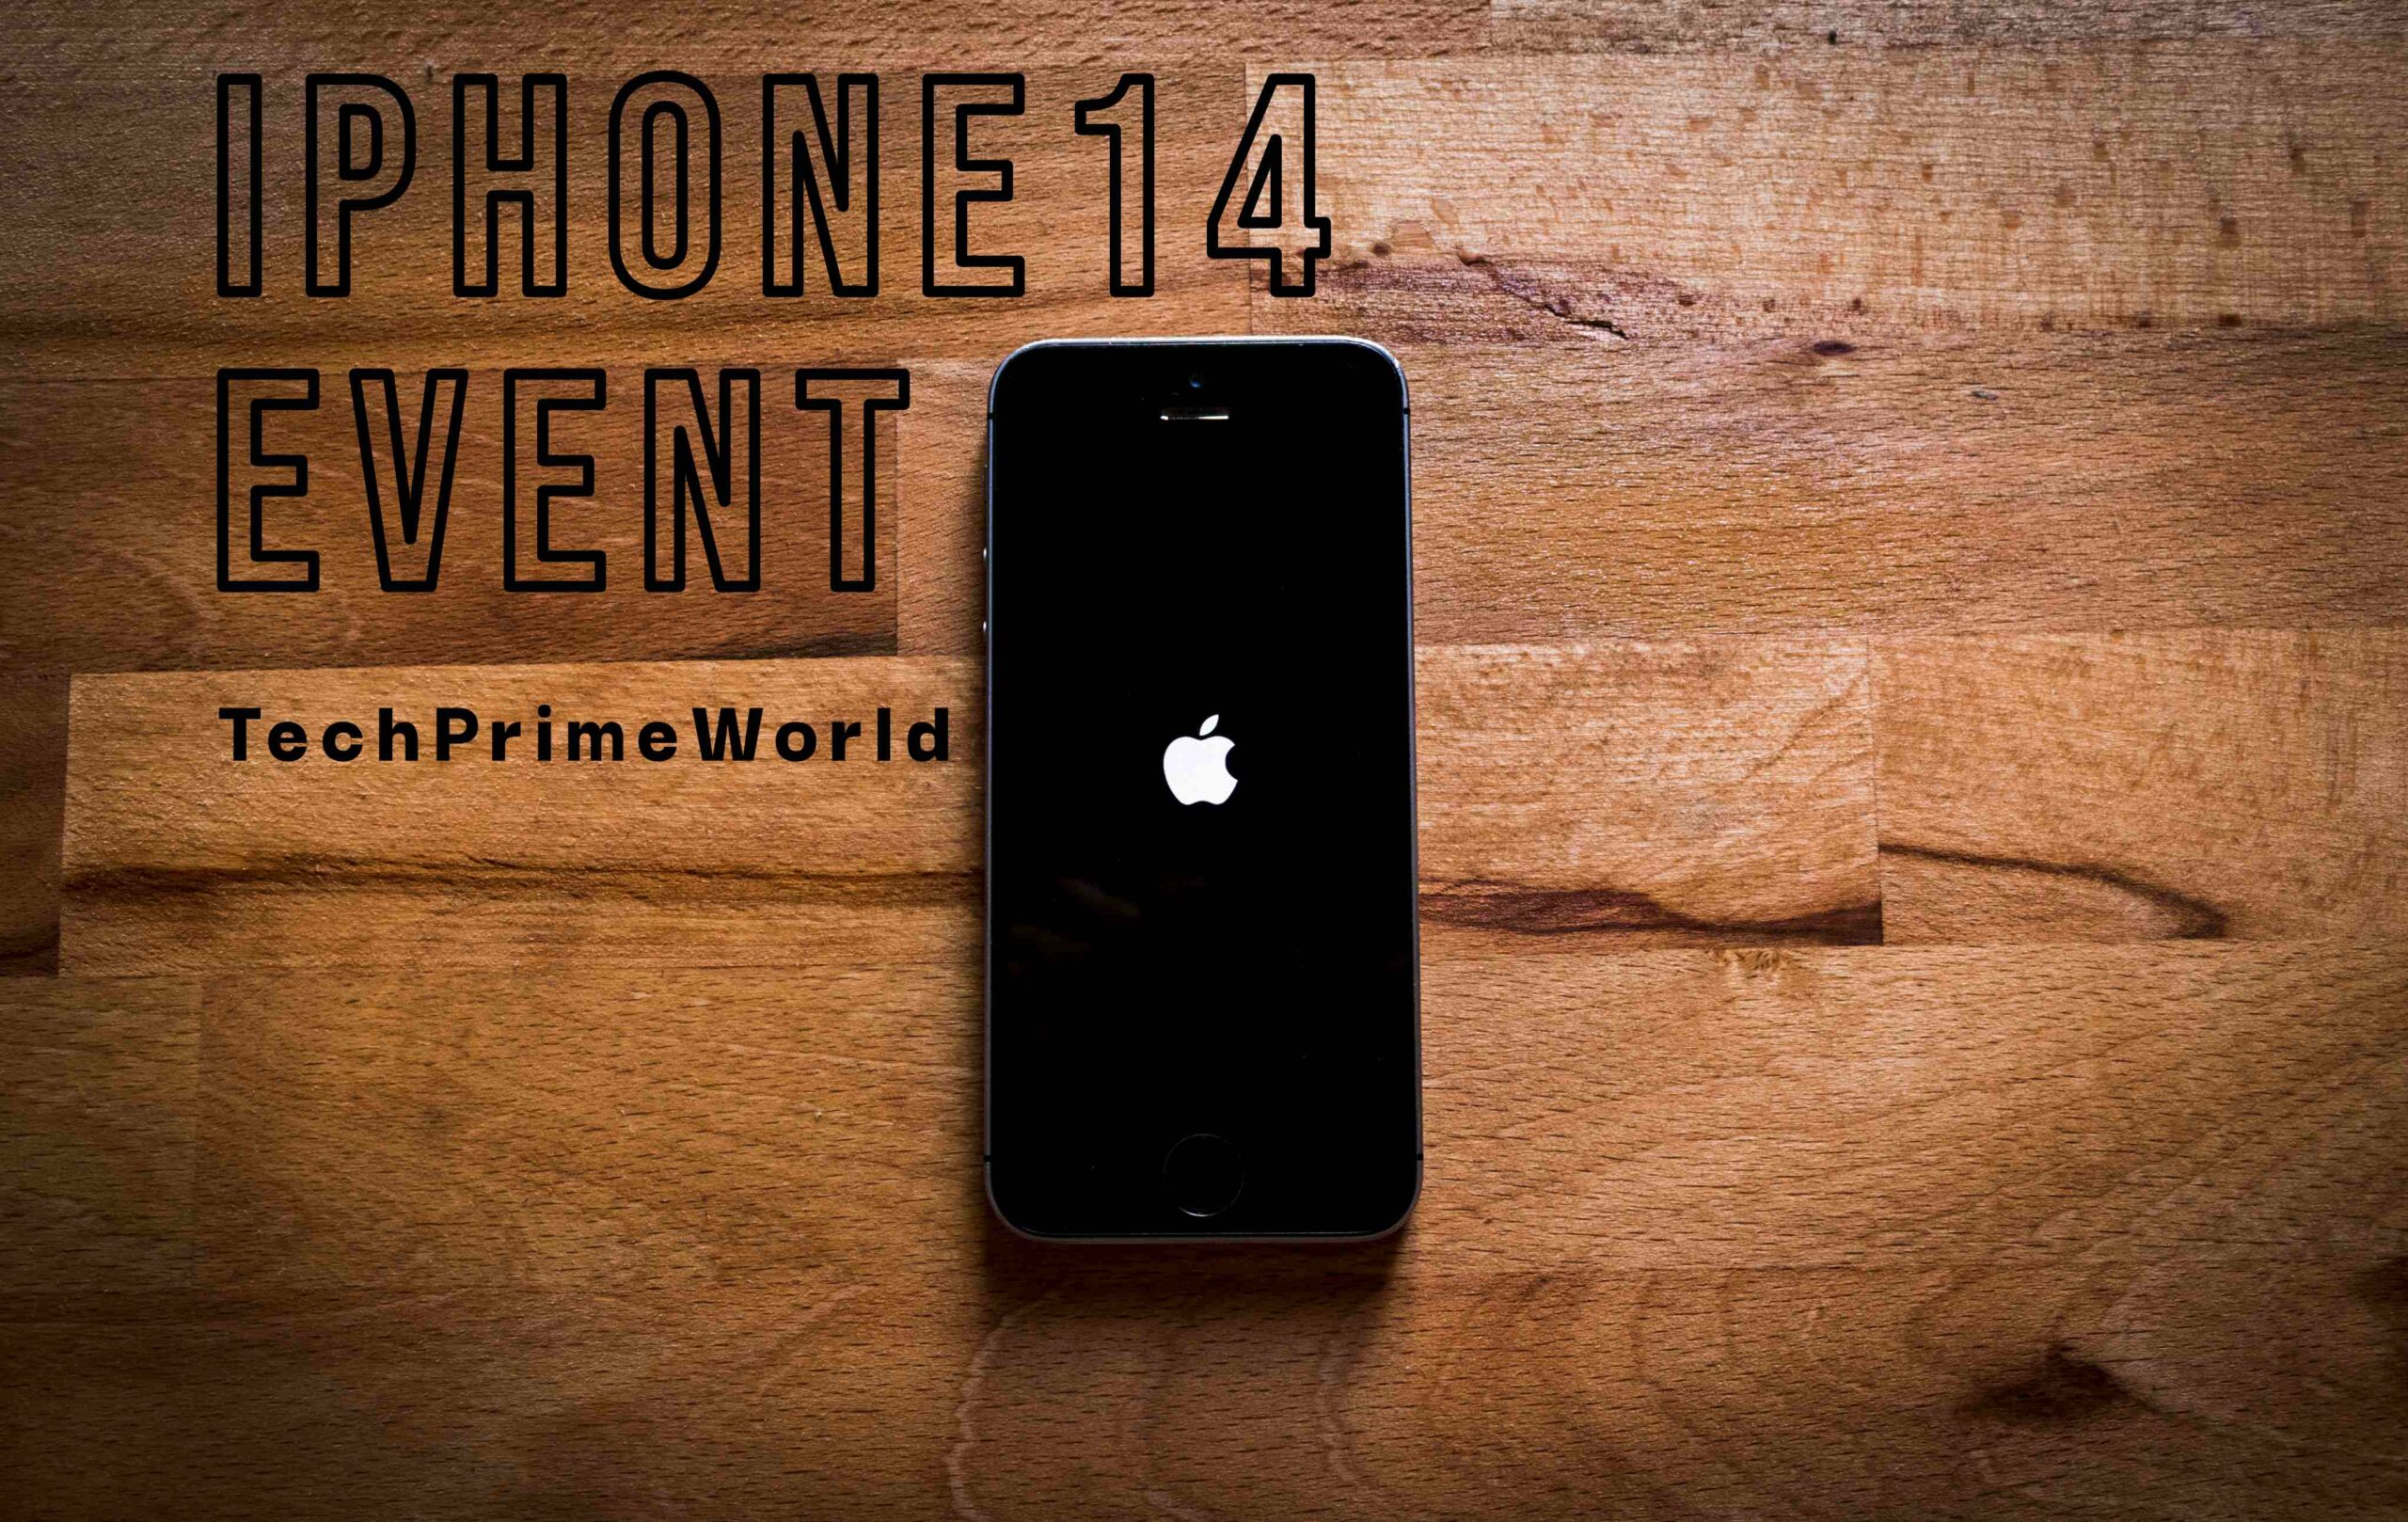 IPHONE 14 EVENT